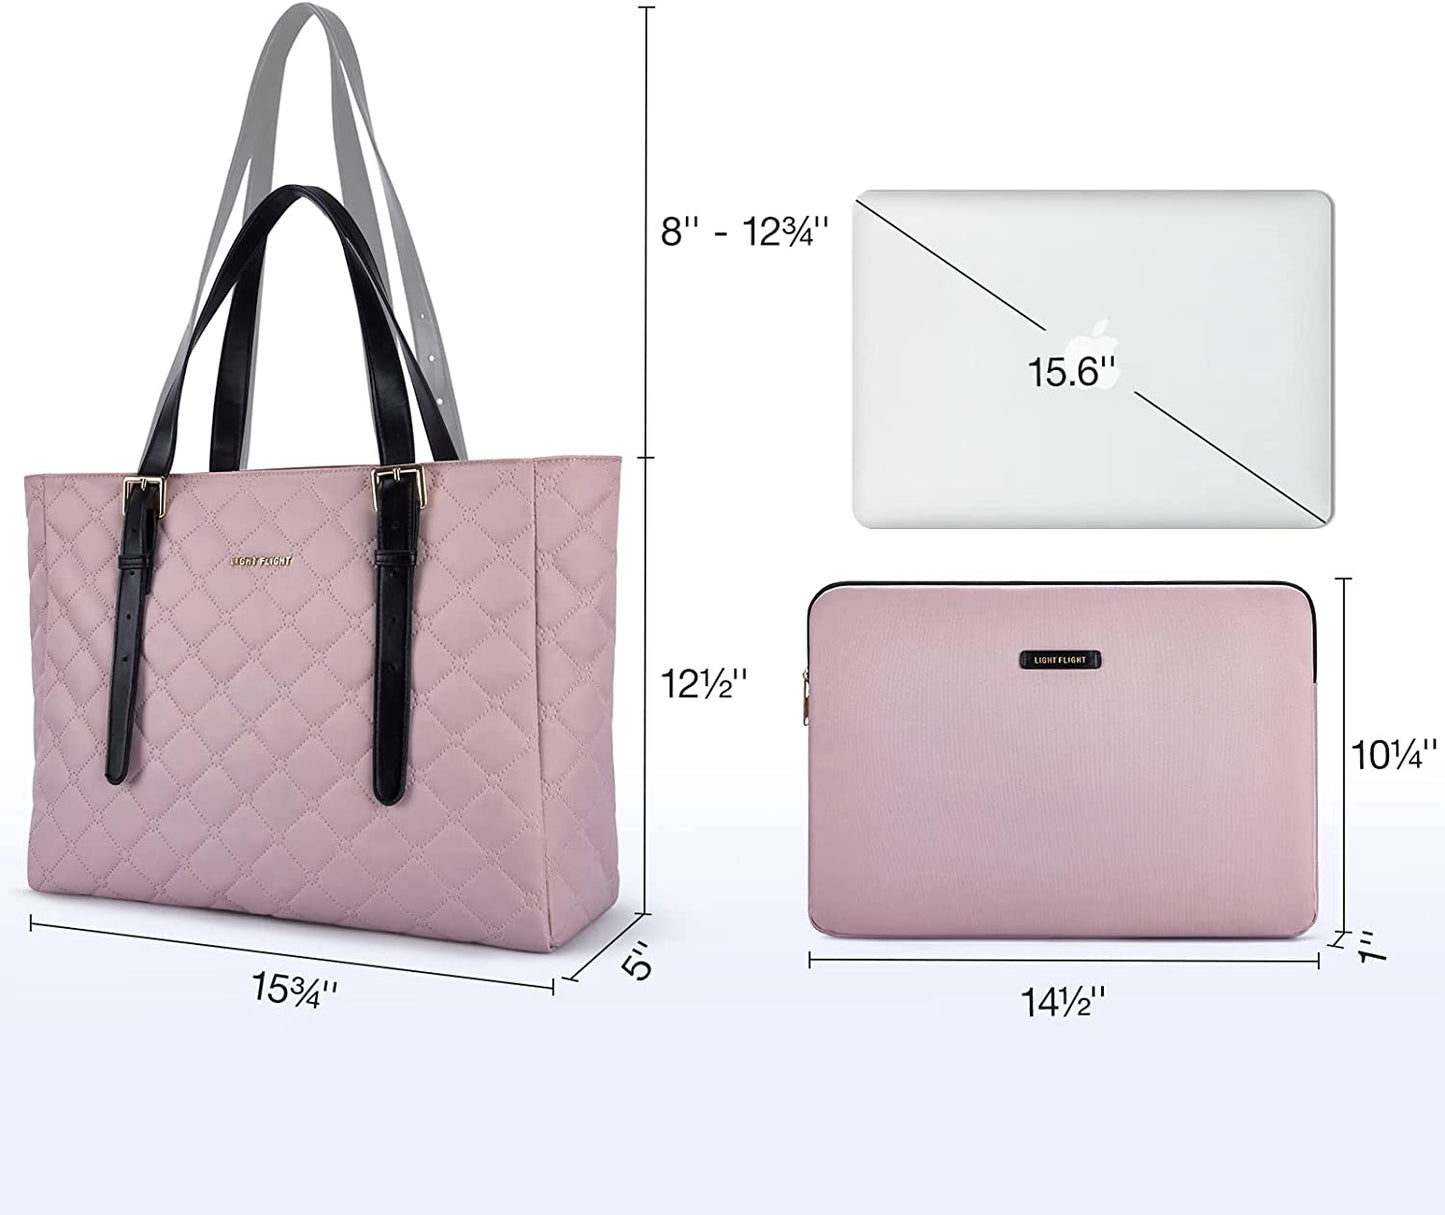 Tote Bag for Women, LIGHT FLIGHT Large Shoulder Bag with Laptop Sleeve Fits 15.6 Inch, 2pcs Set for Work, School